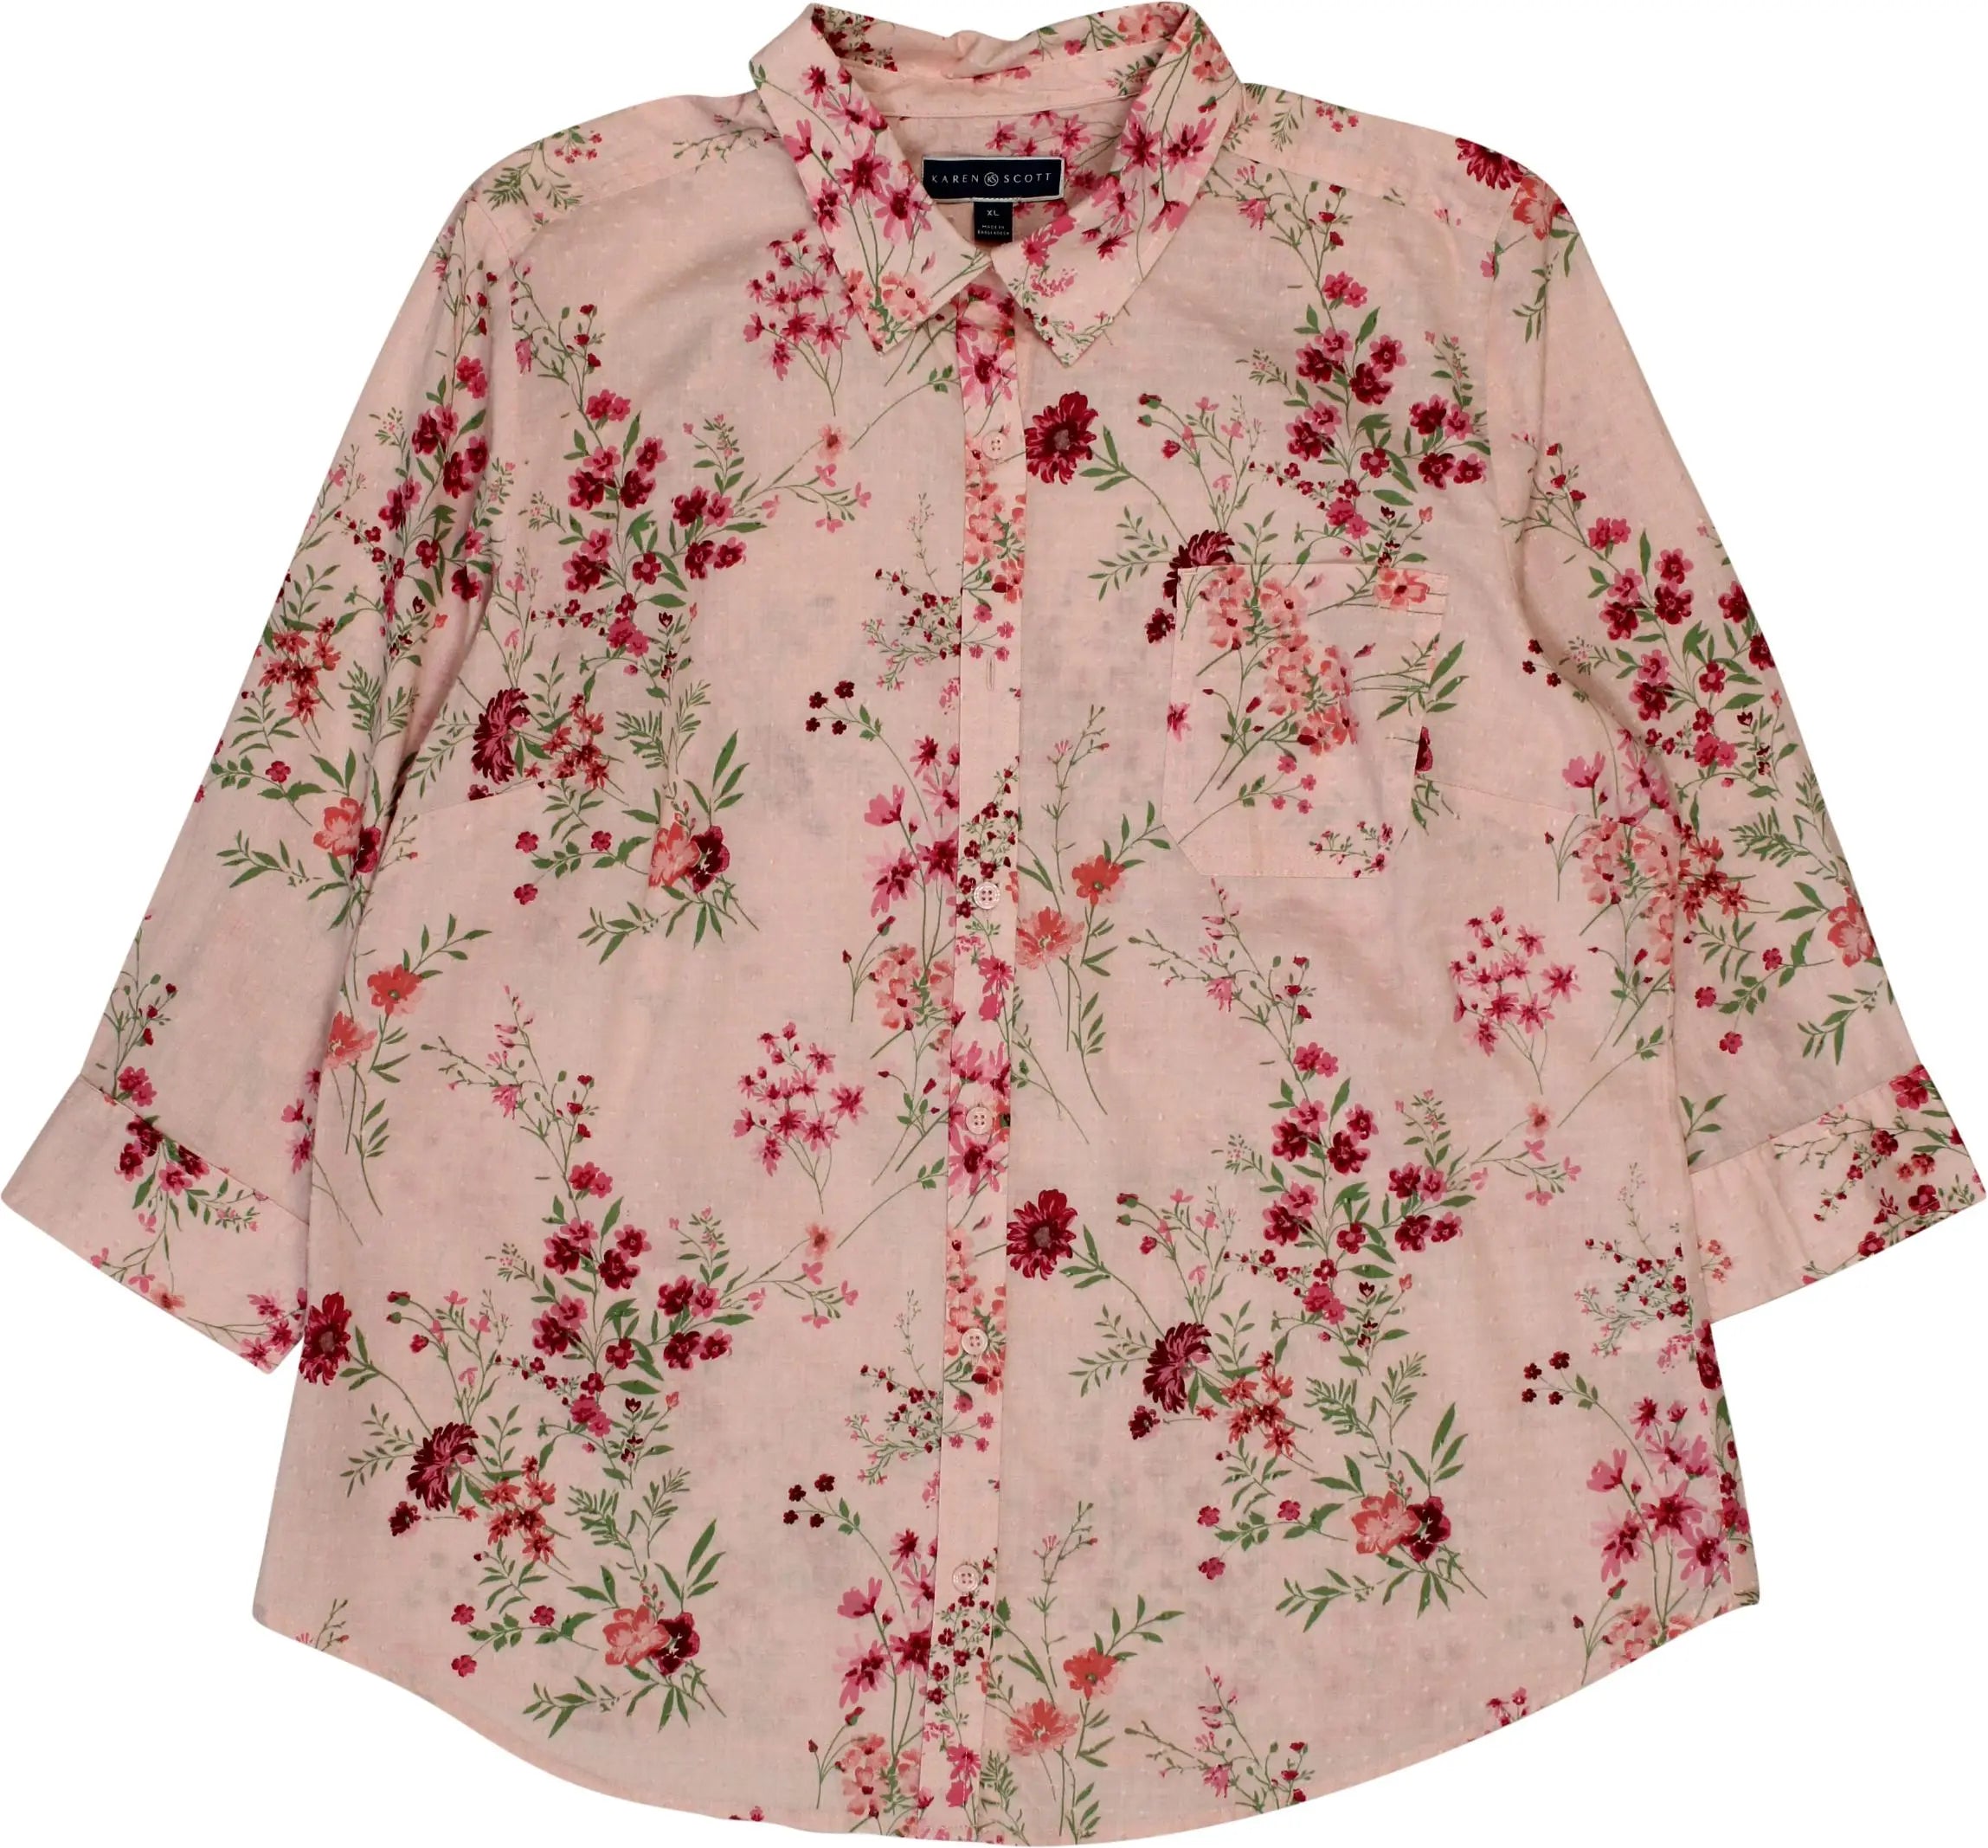 Karen Scott - Floral Blouse- ThriftTale.com - Vintage and second handclothing